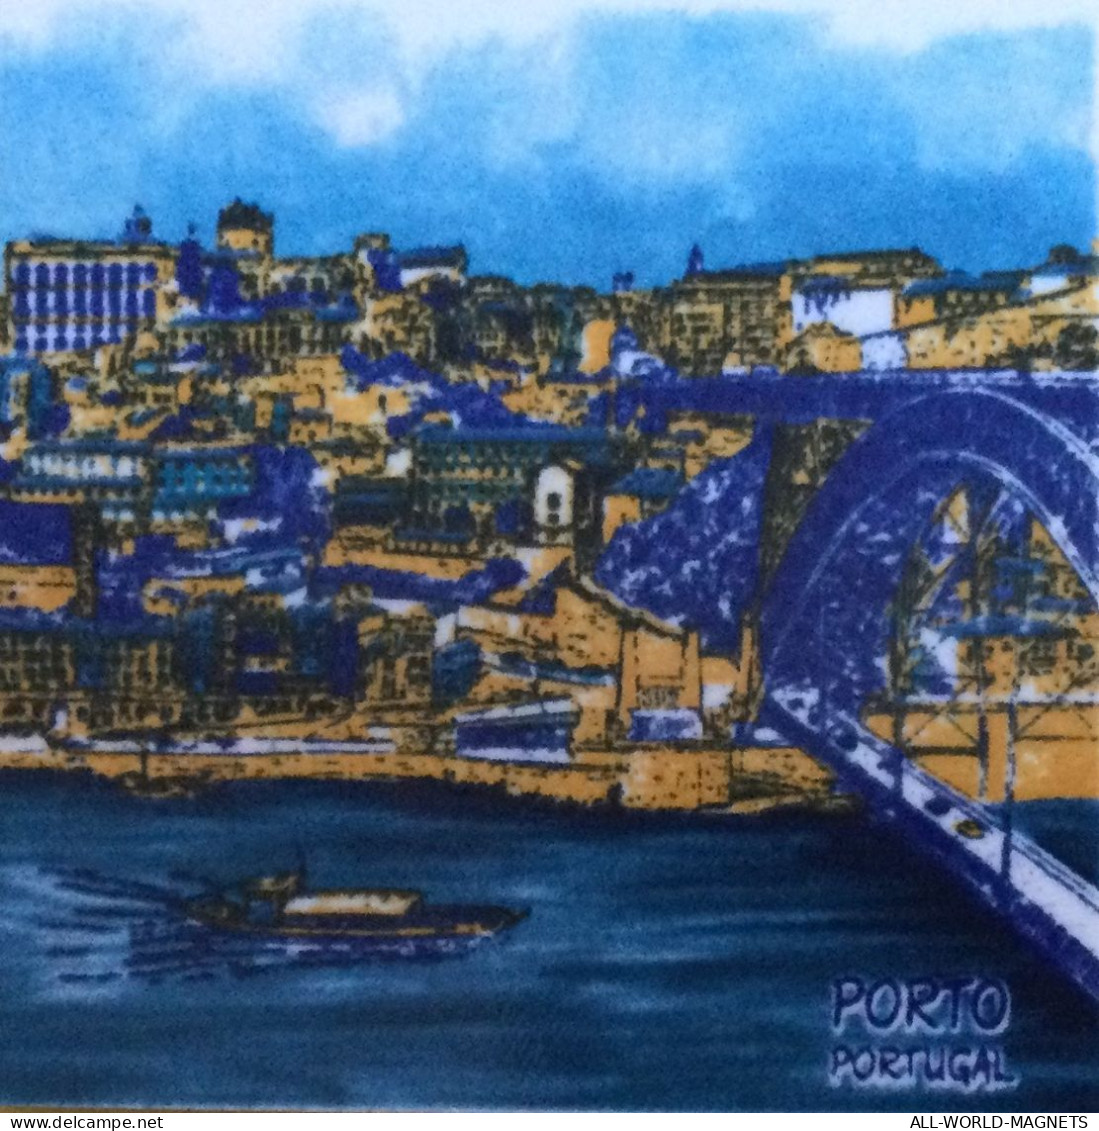 Porto, Duoro River, Bridges, Porto Old City Vew Portugal Souvenir Fridge Magnet - Magnetos